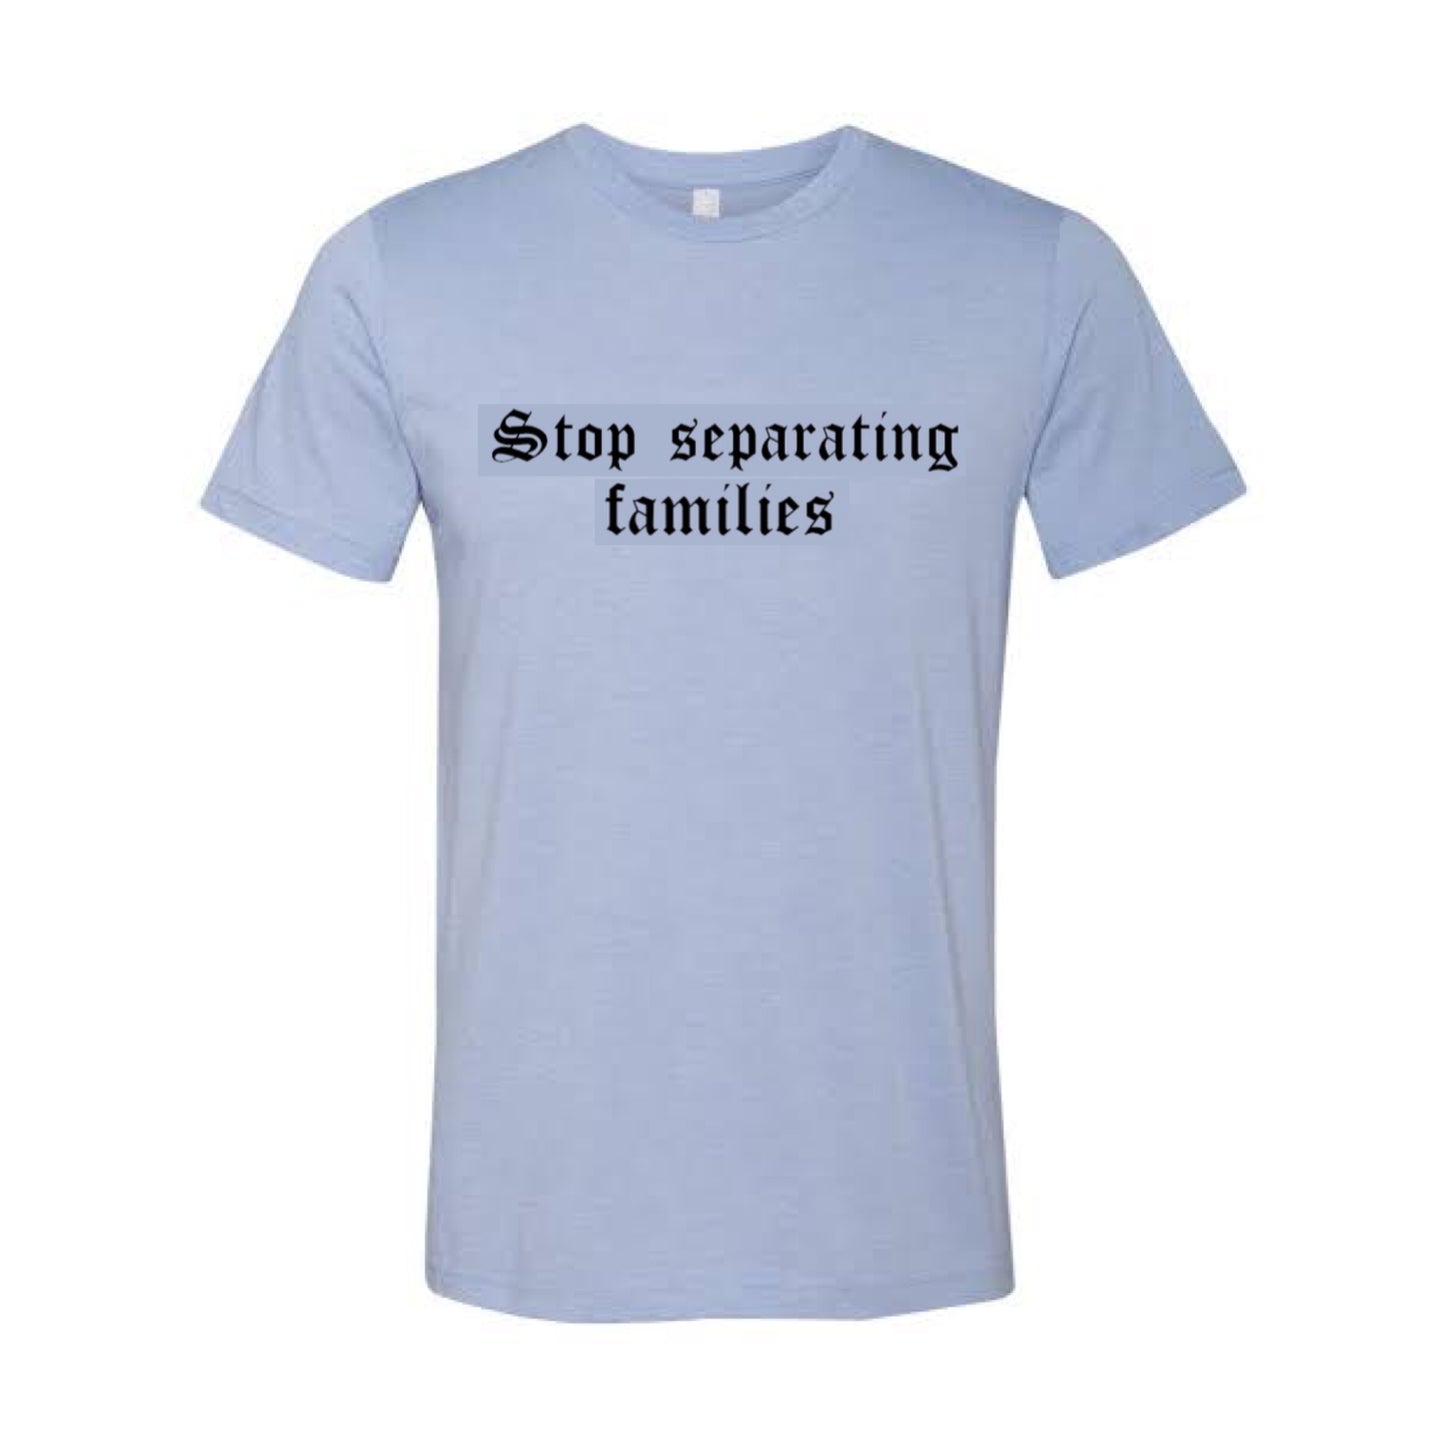 Stop separating families unisex short-sleeve T-shirt